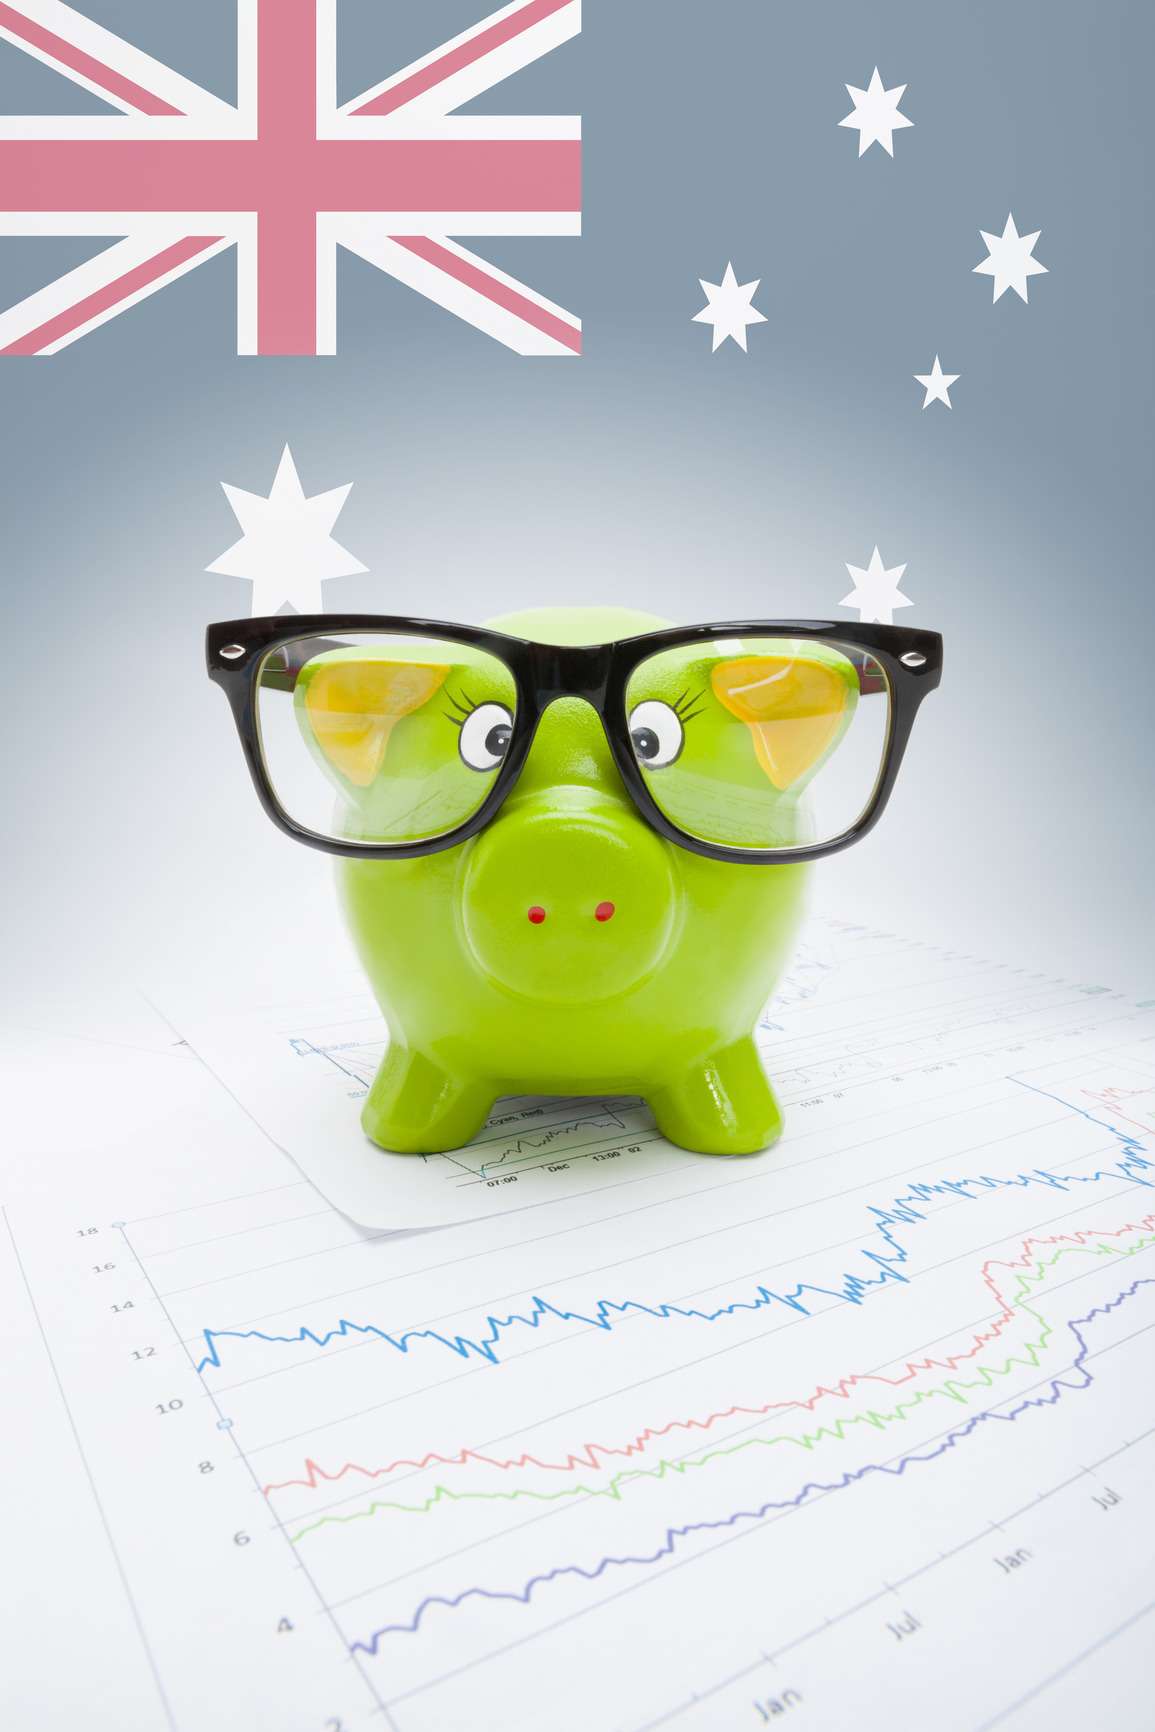 Piggy bank with flag on background - Australia